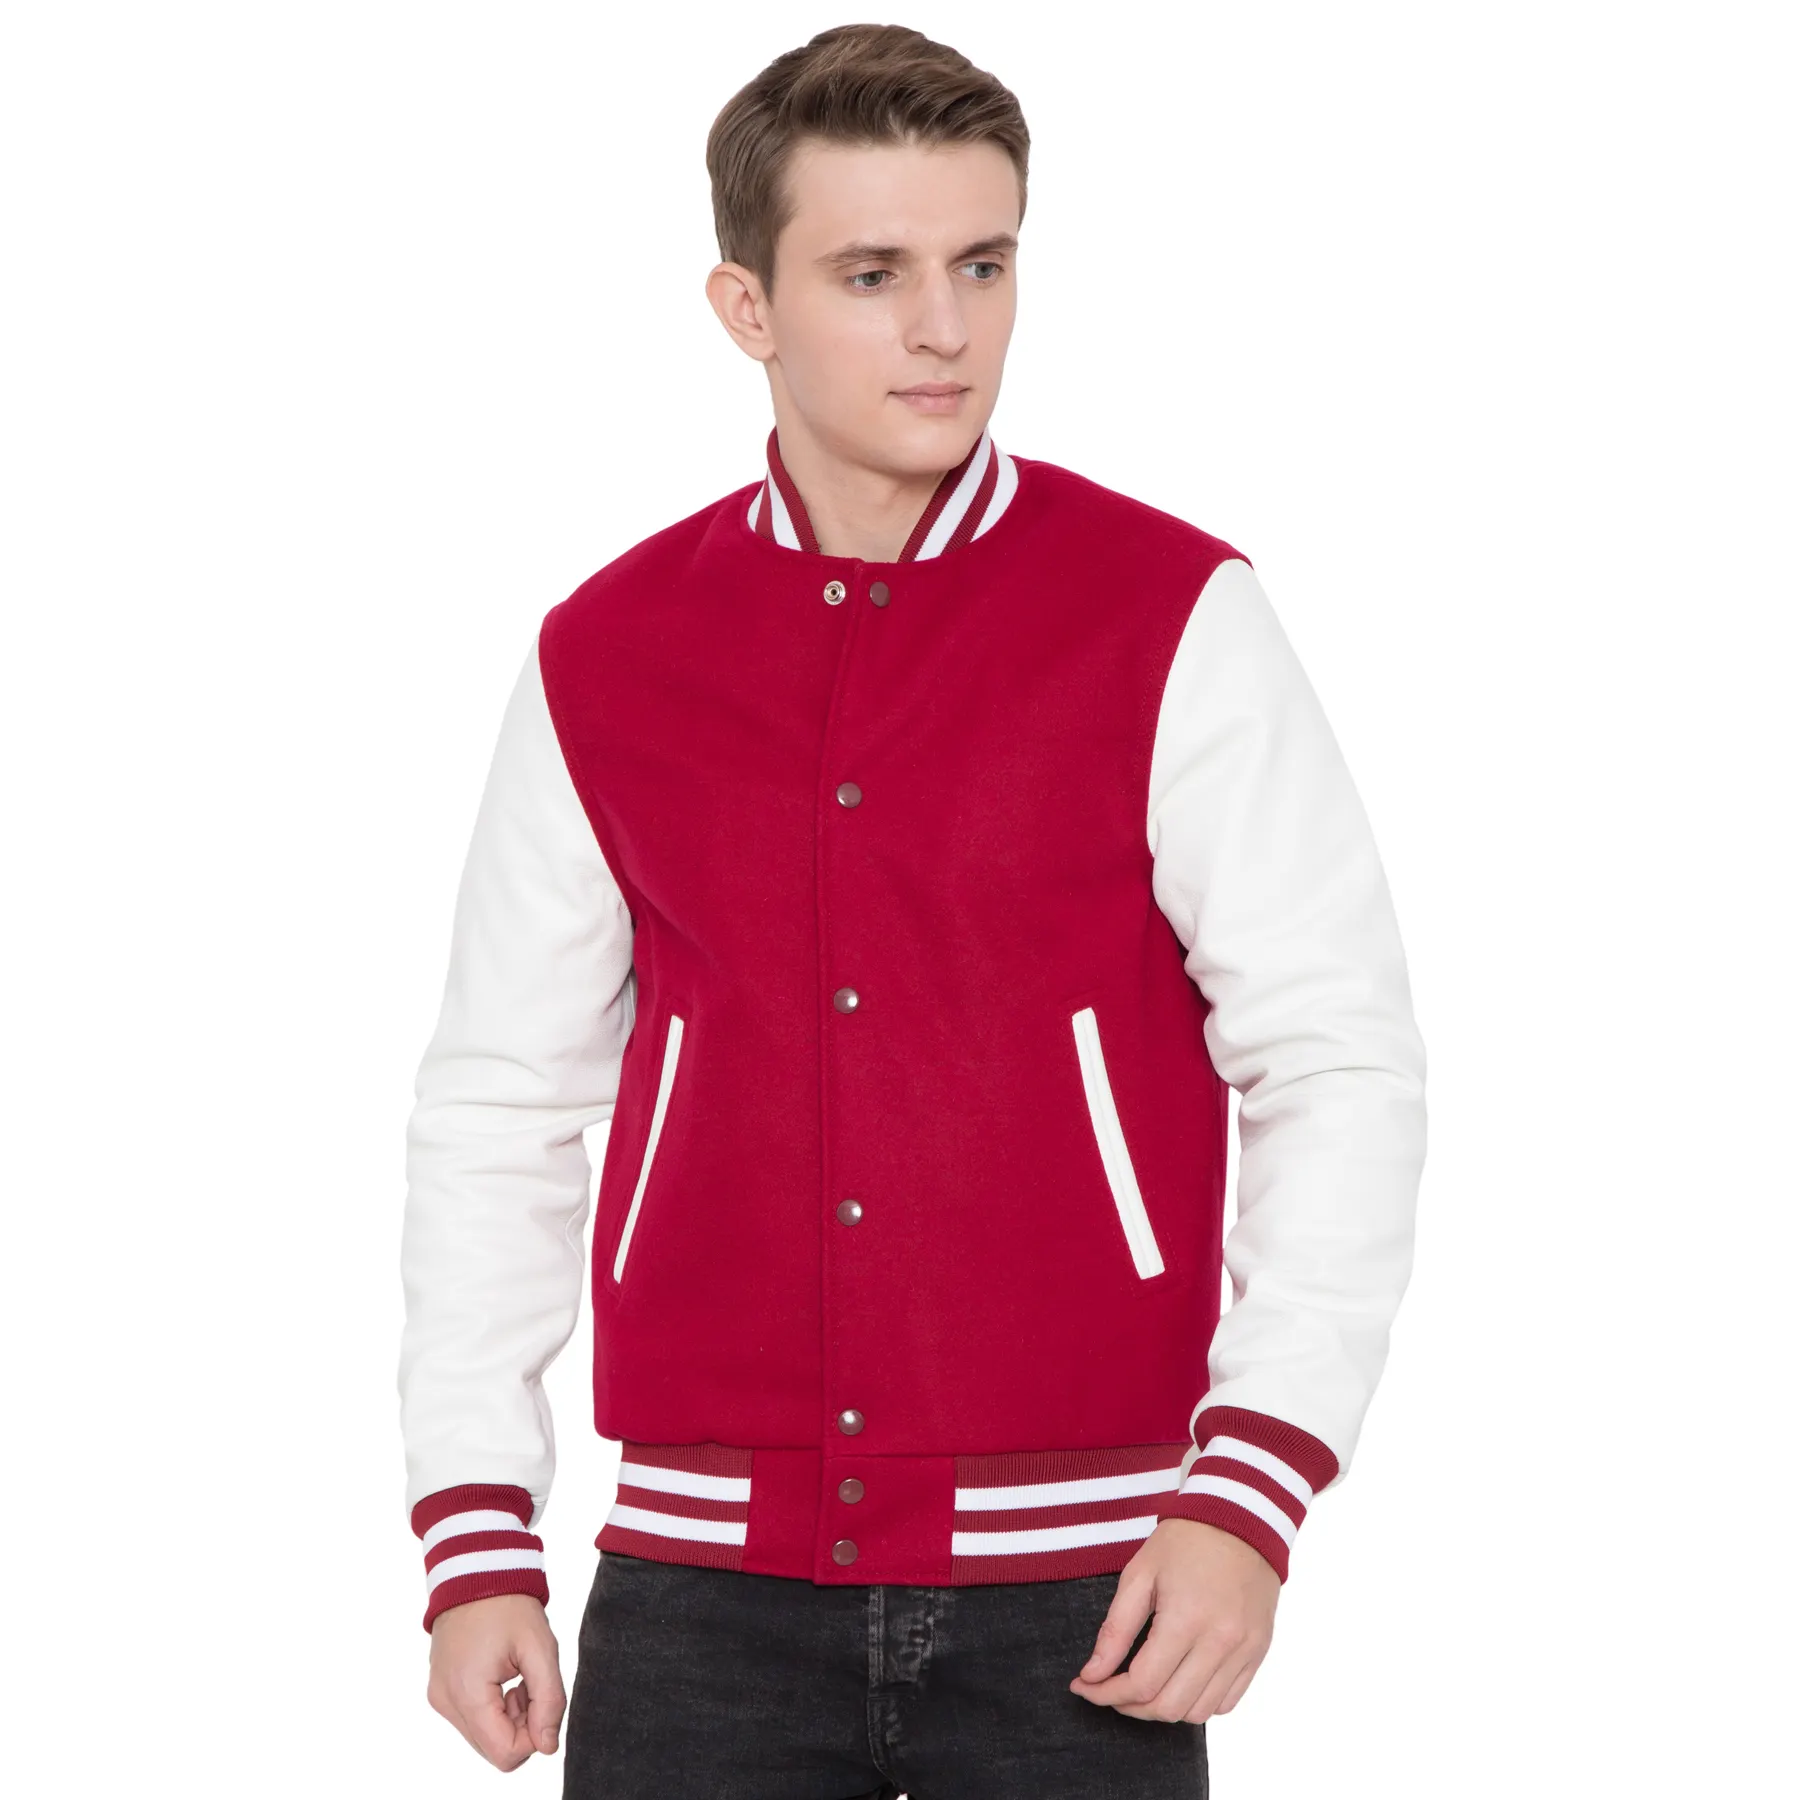 Latest Fashion Wholesale Blank Custom College Letterman Baseball Wool Jackets High Quality Customized By KALLIS FIGHTER GEAR